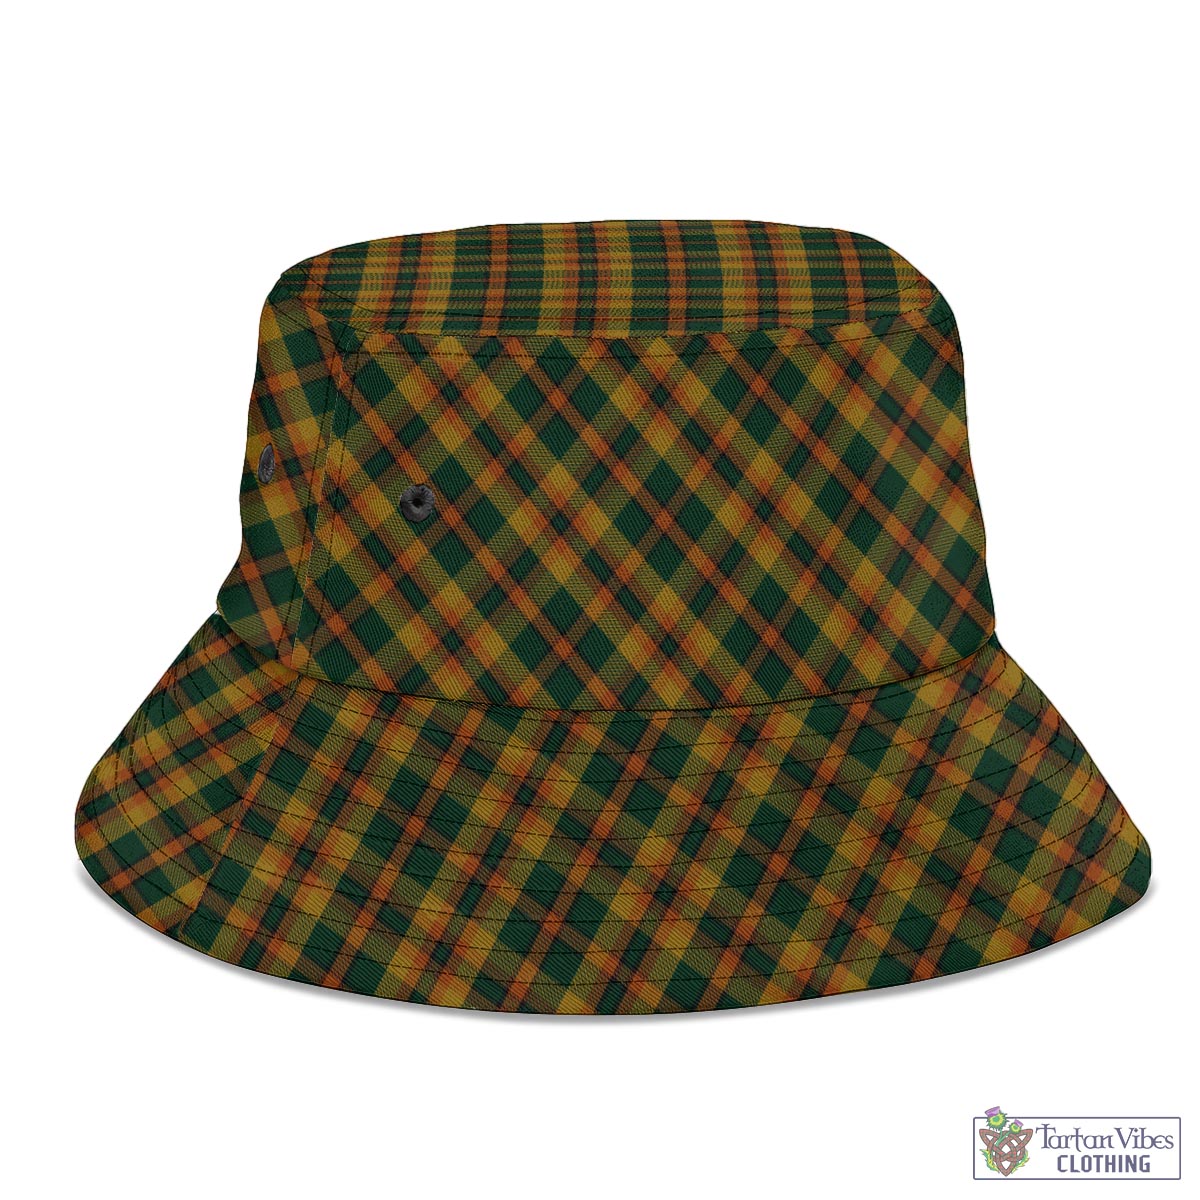 Tartan Vibes Clothing Londonderry (Derry) County Ireland Tartan Bucket Hat